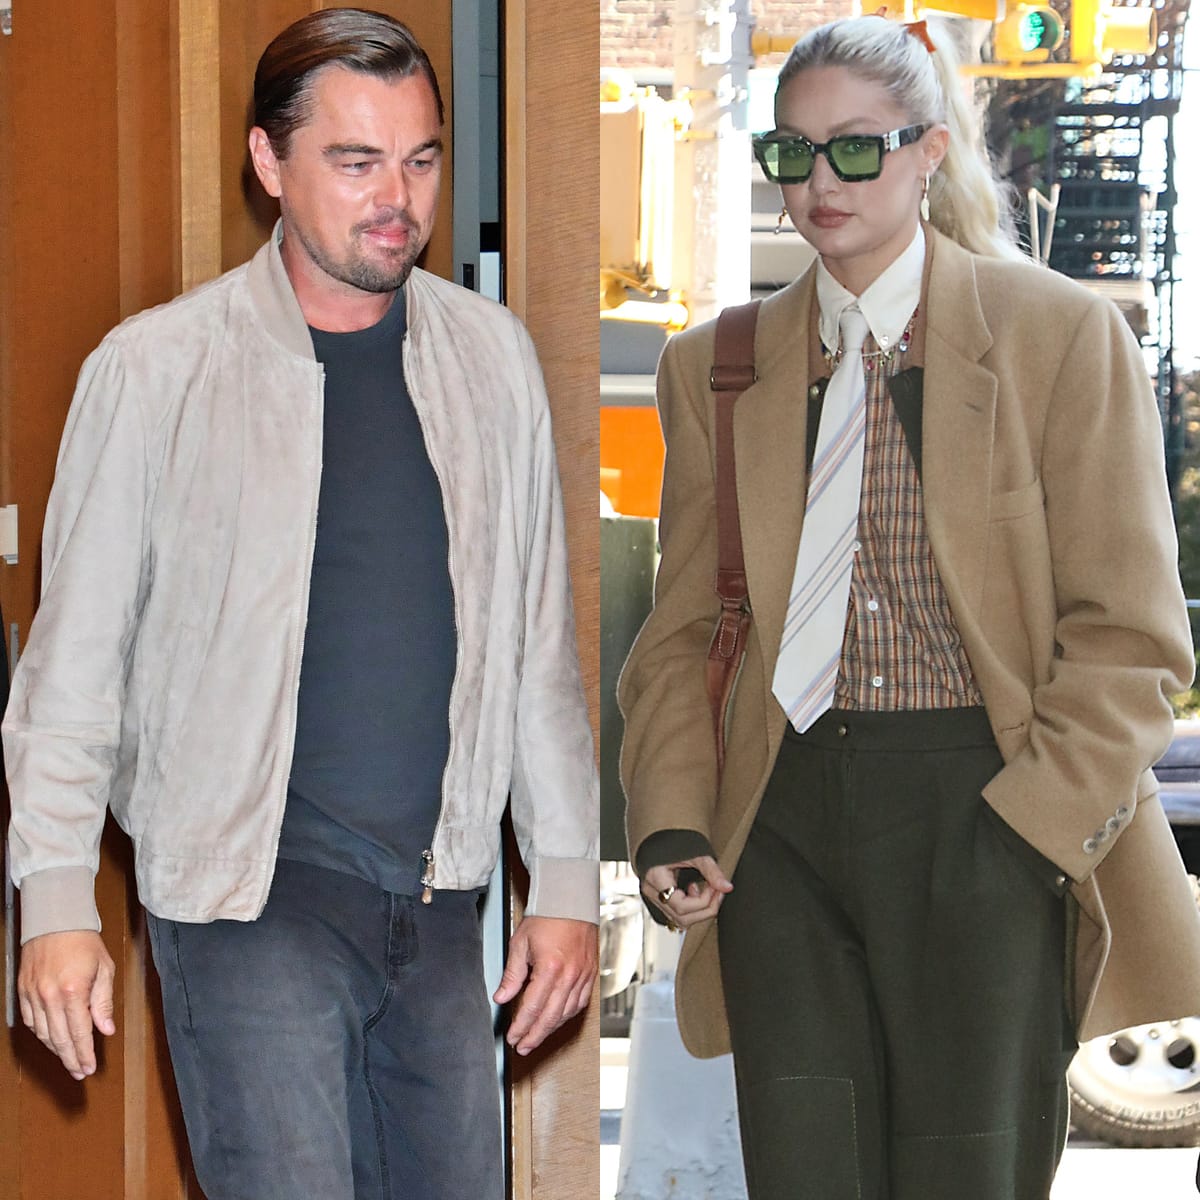 Romance rumors between Leonardo DiCaprio and Gigi Hadid are still going strong